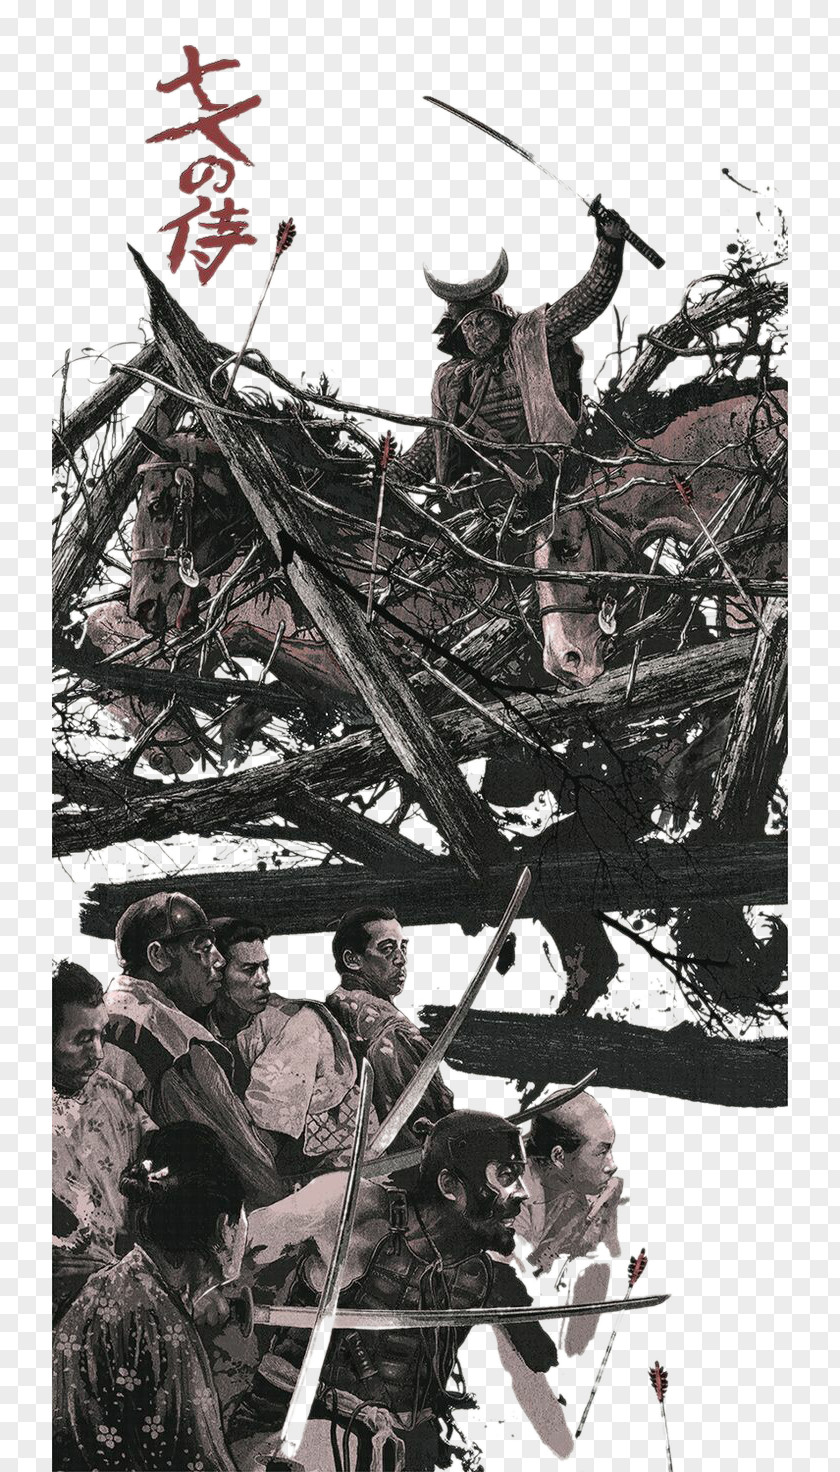 Japanese Samurai War Poster Design School Of Visual Arts Illustrator Illustration PNG